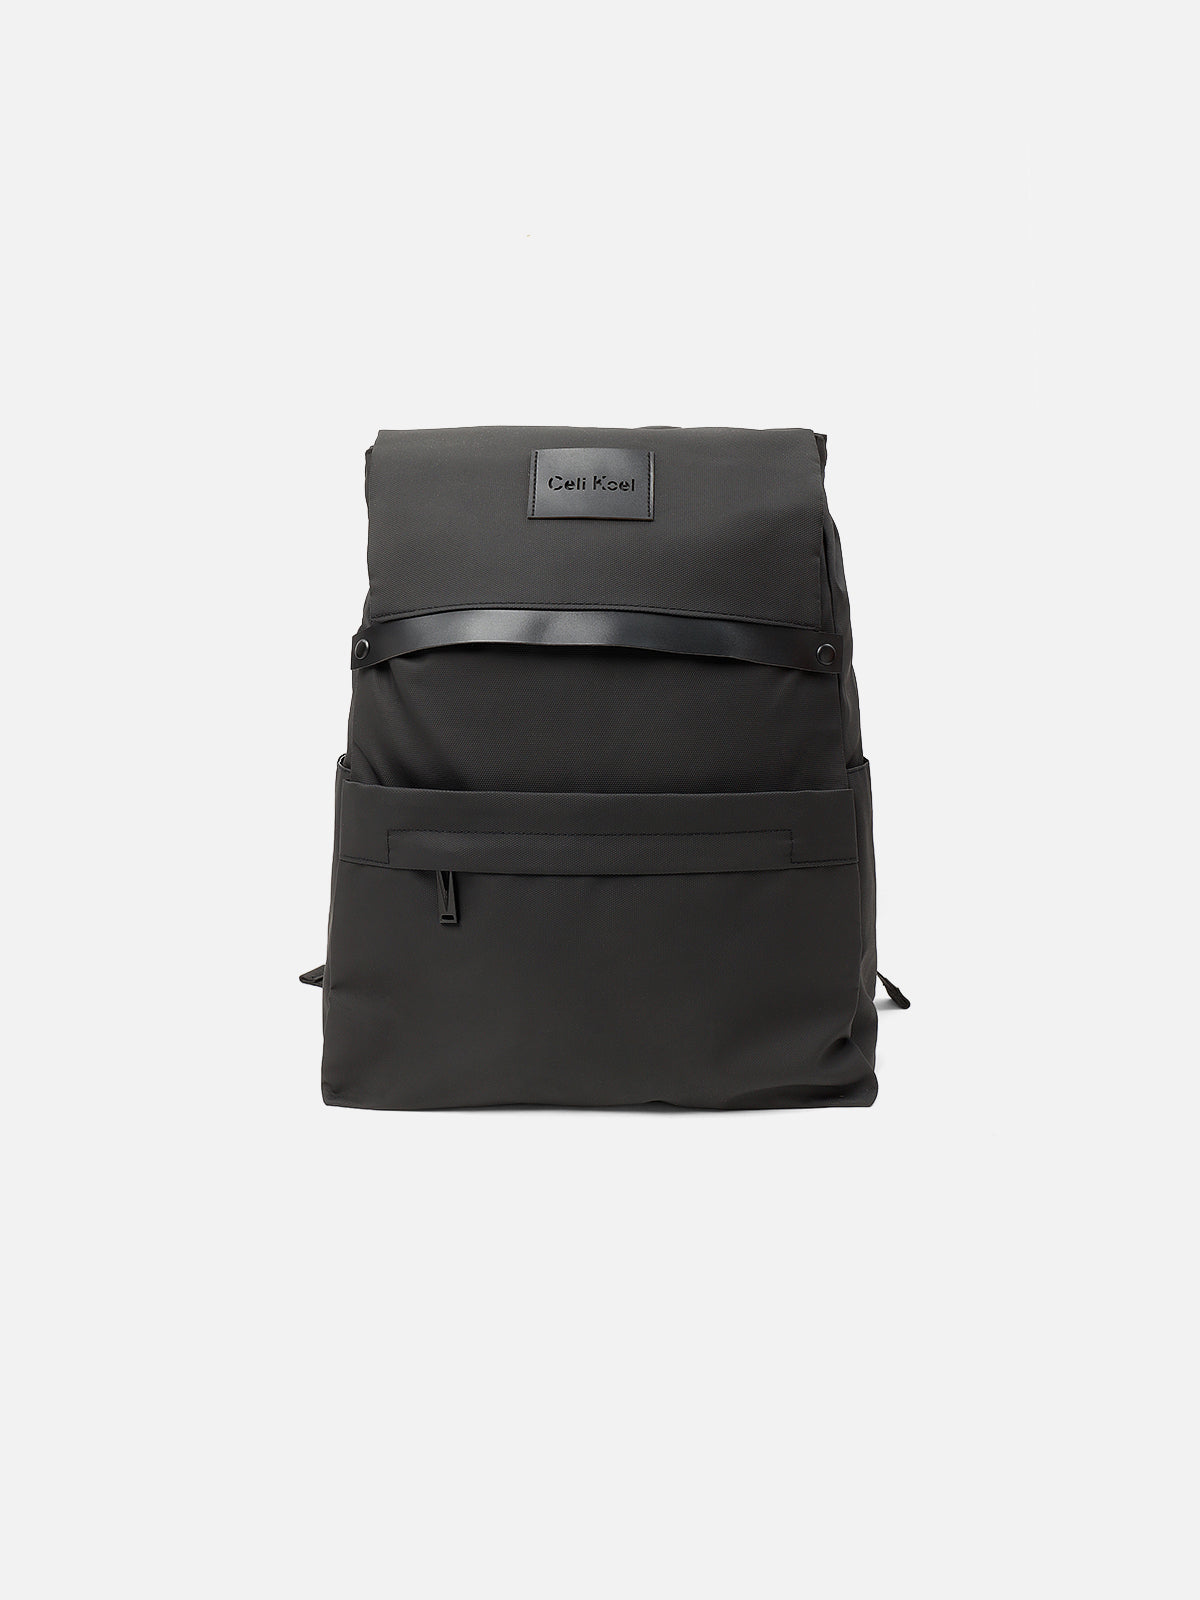 Black Backpack - FABG24-007